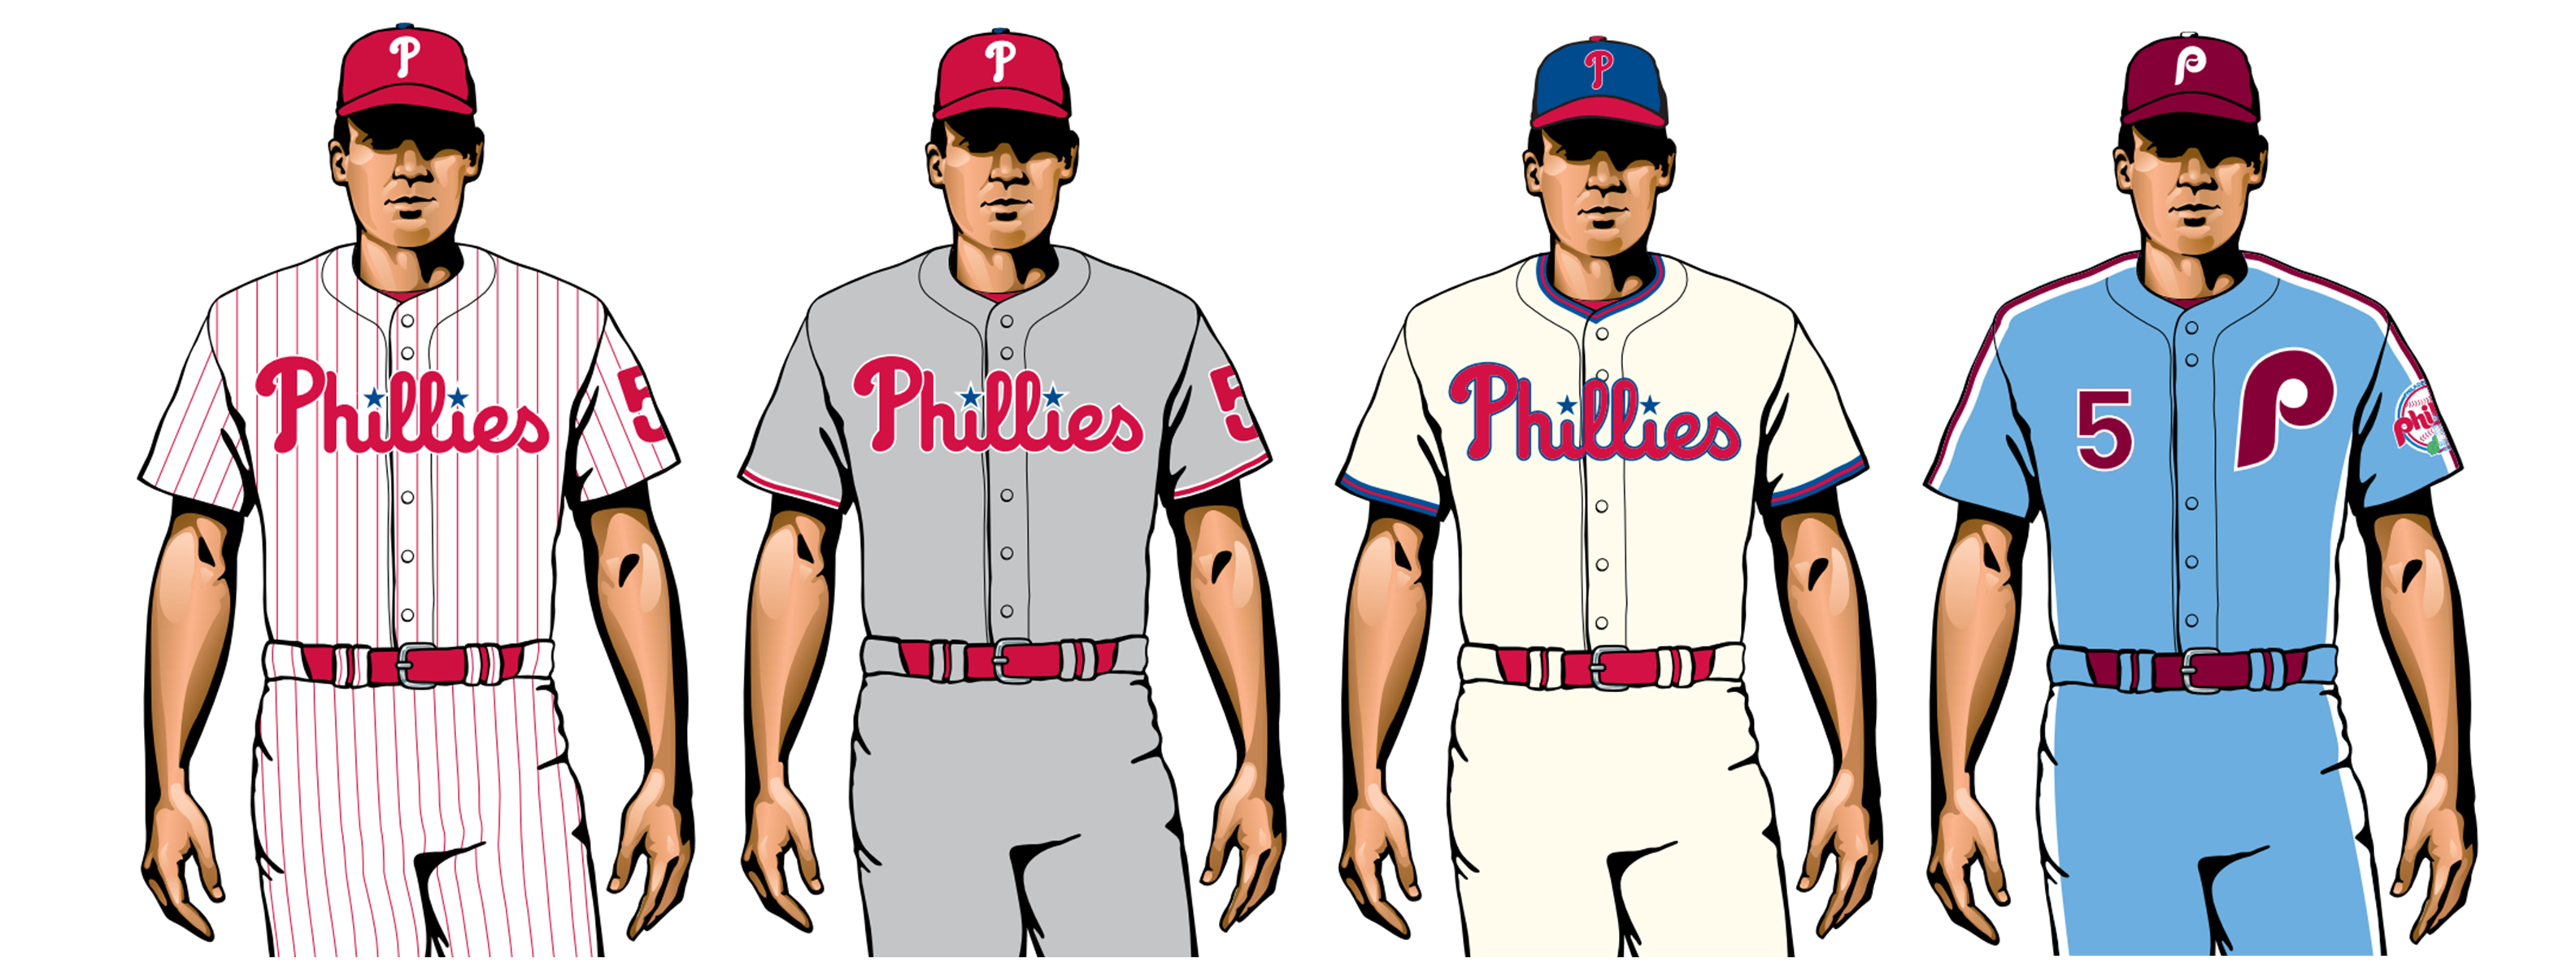 phillies 2020 uniforms